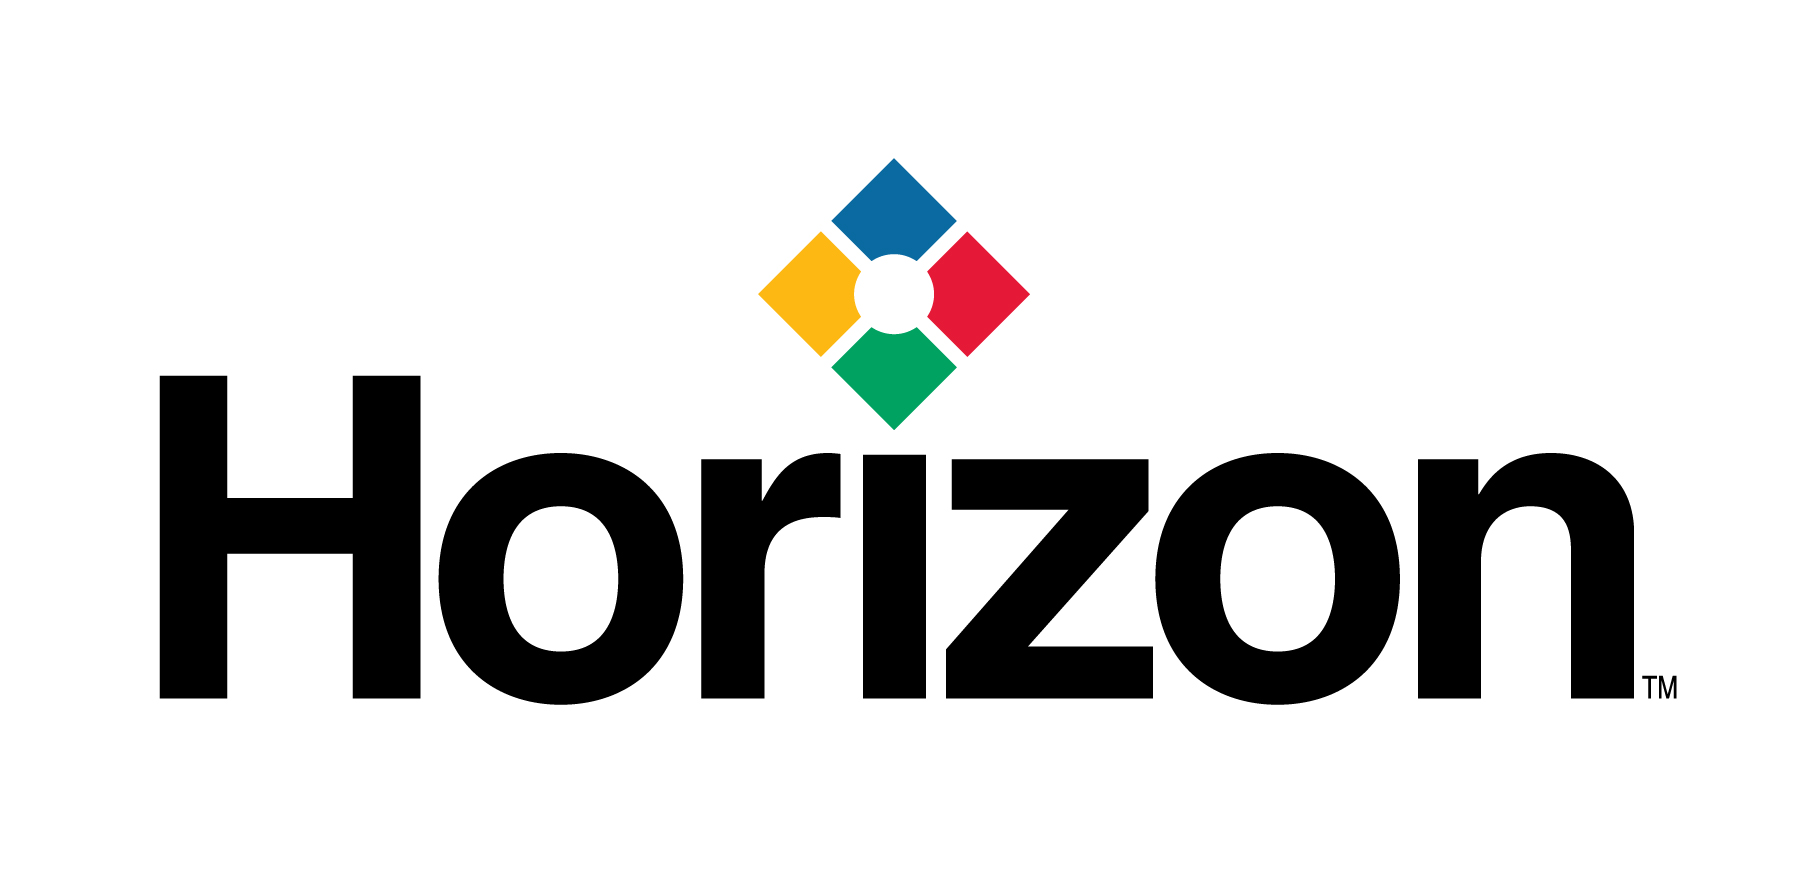 horizon-logo